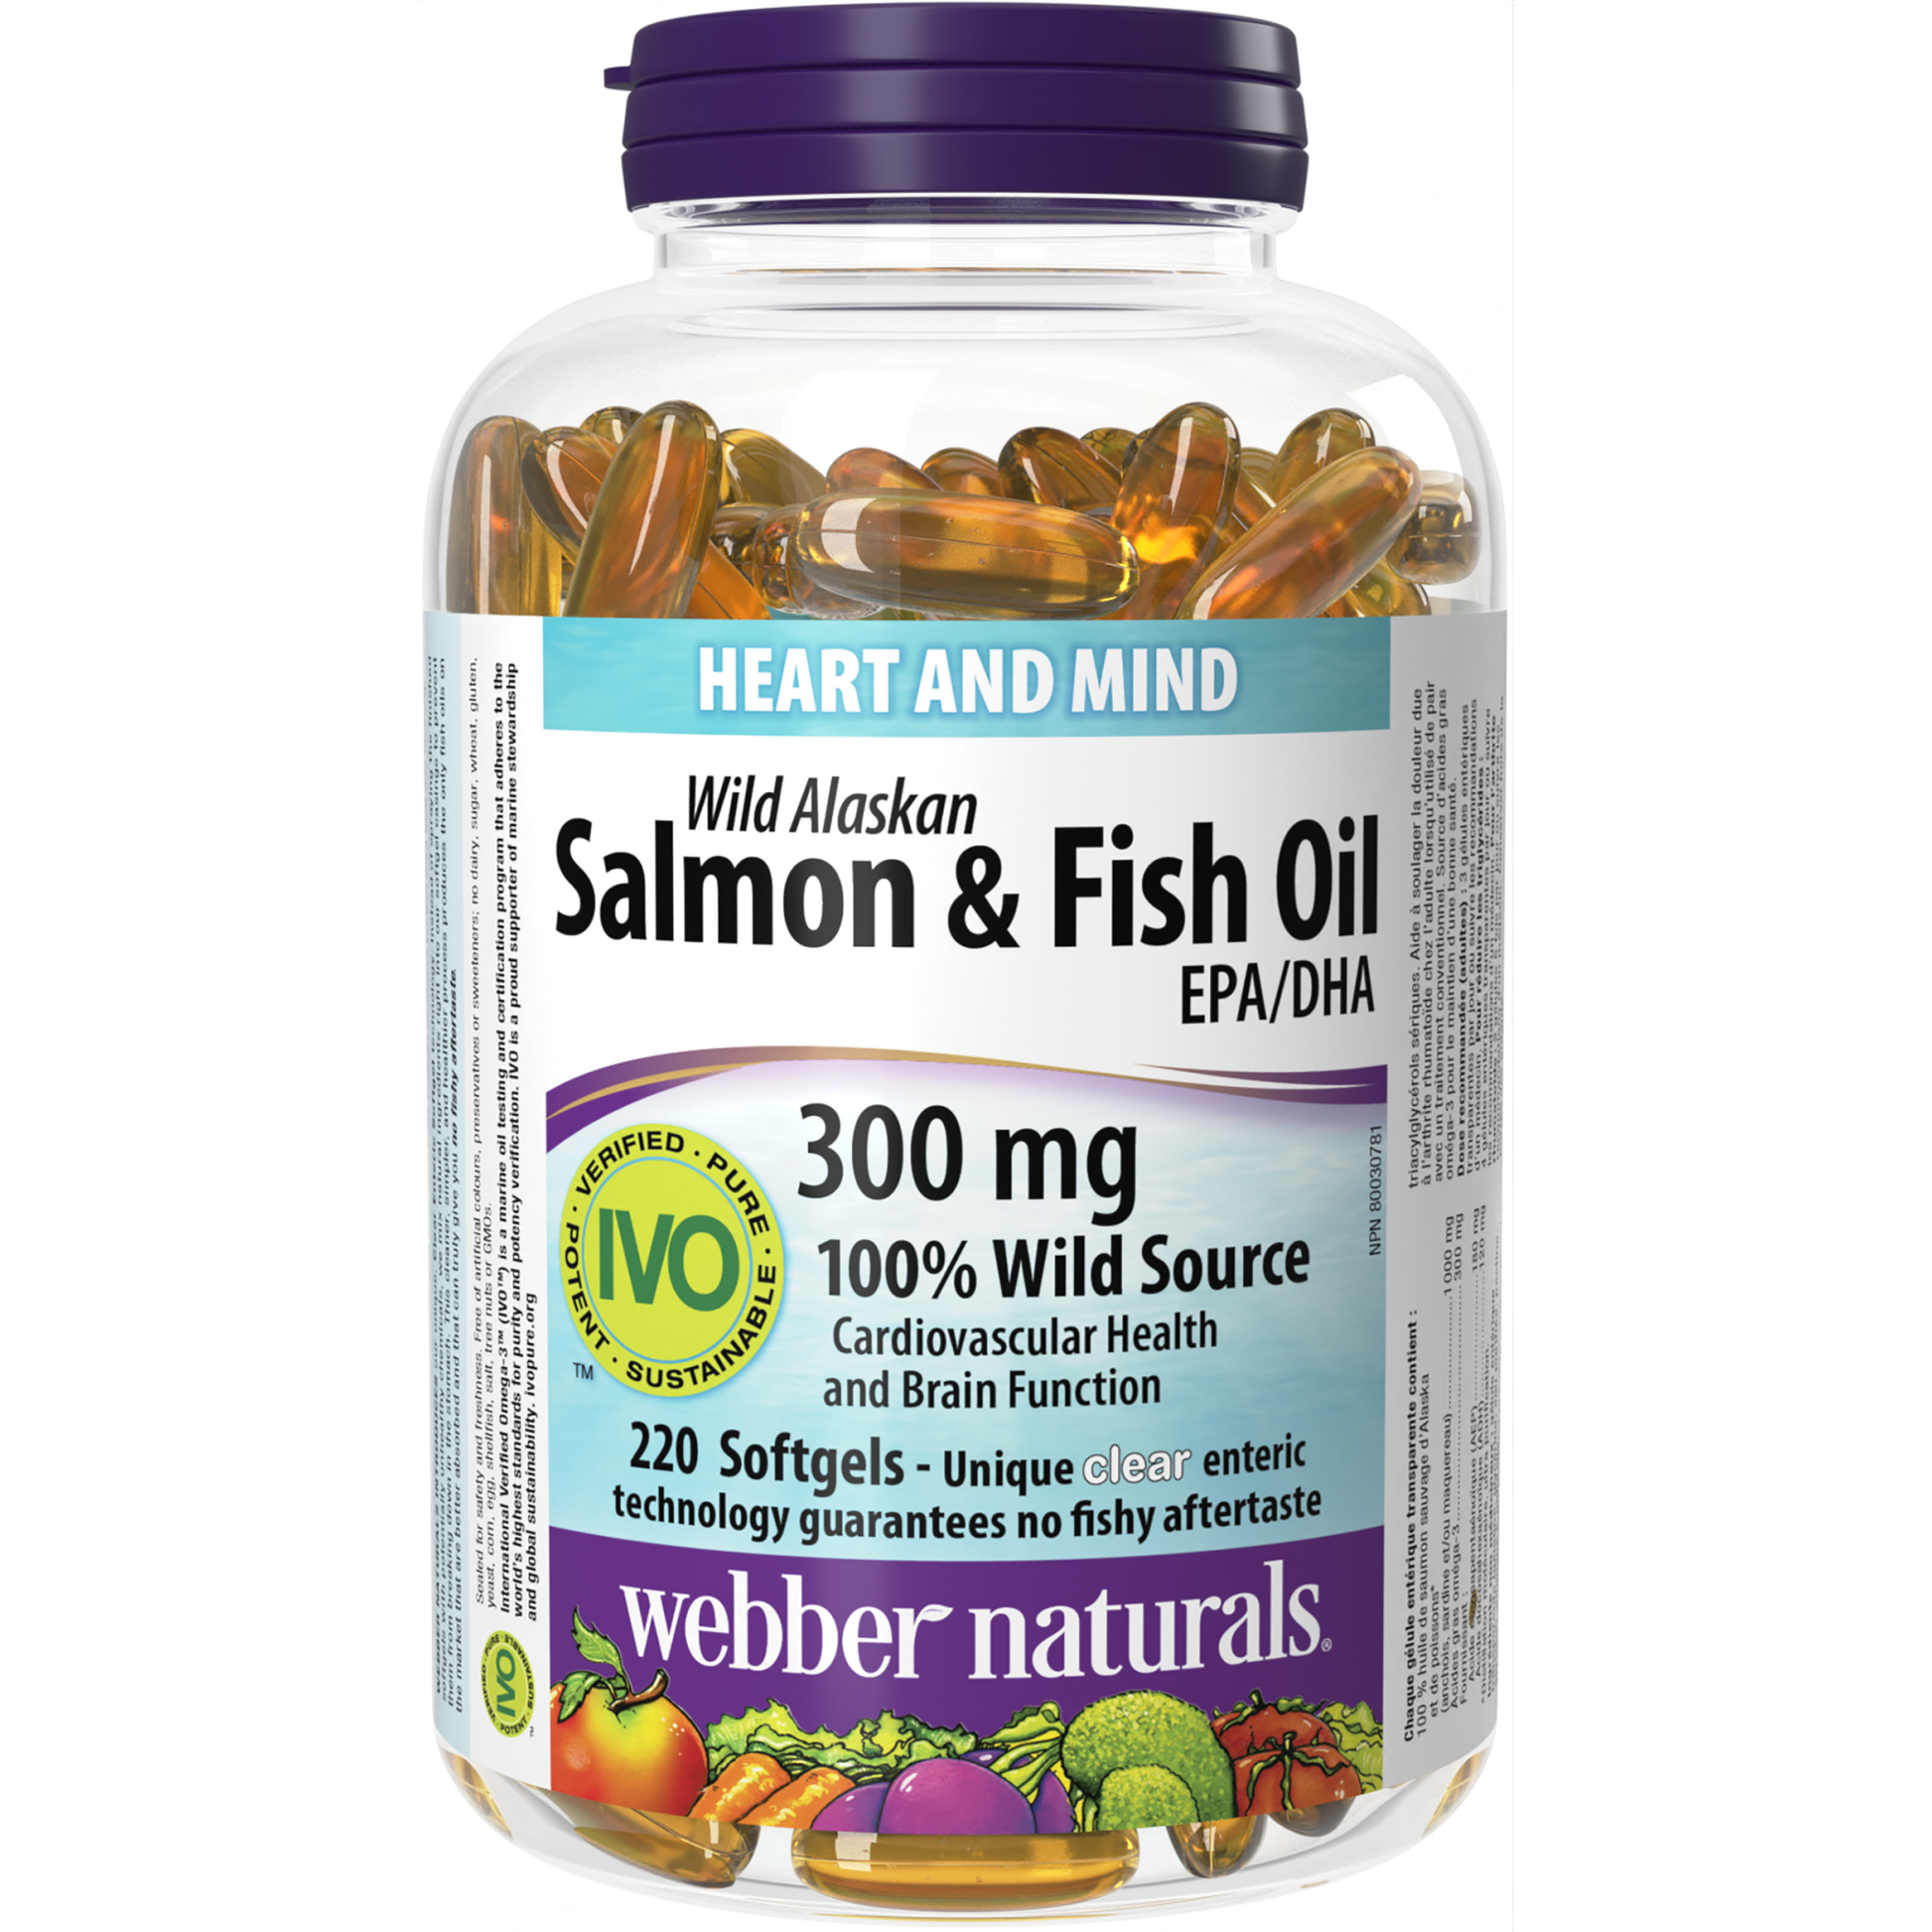 Wild Alaskan Salmon & Fish Oil 300 mg EPA/DHA for Webber Naturals|v|hi-res|WN3398